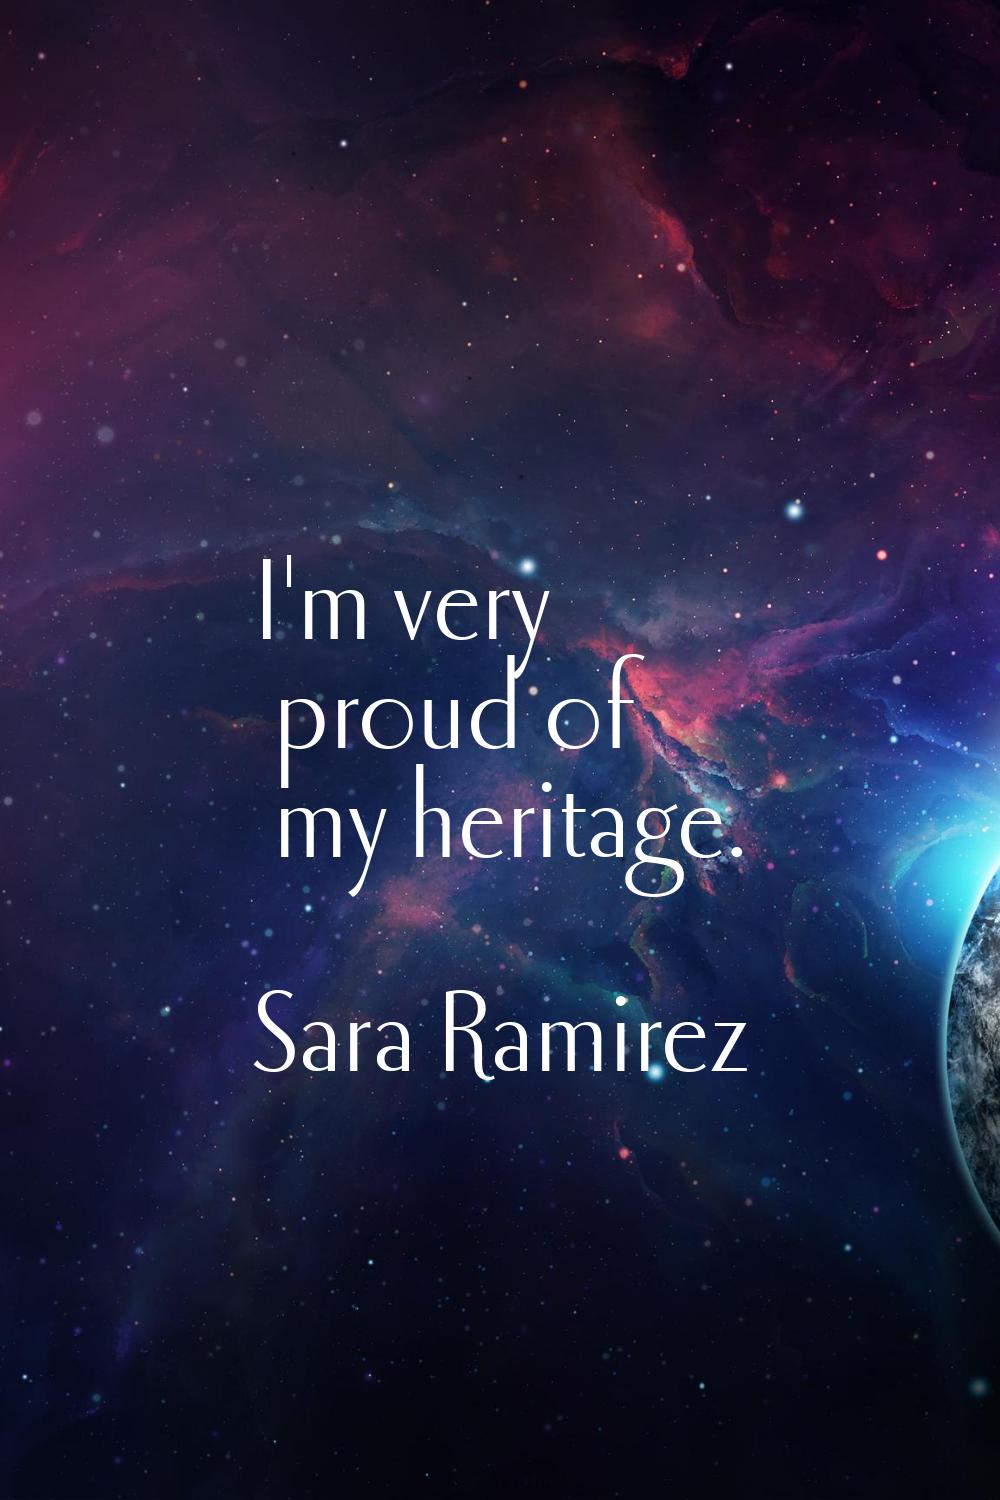 I'm very proud of my heritage.